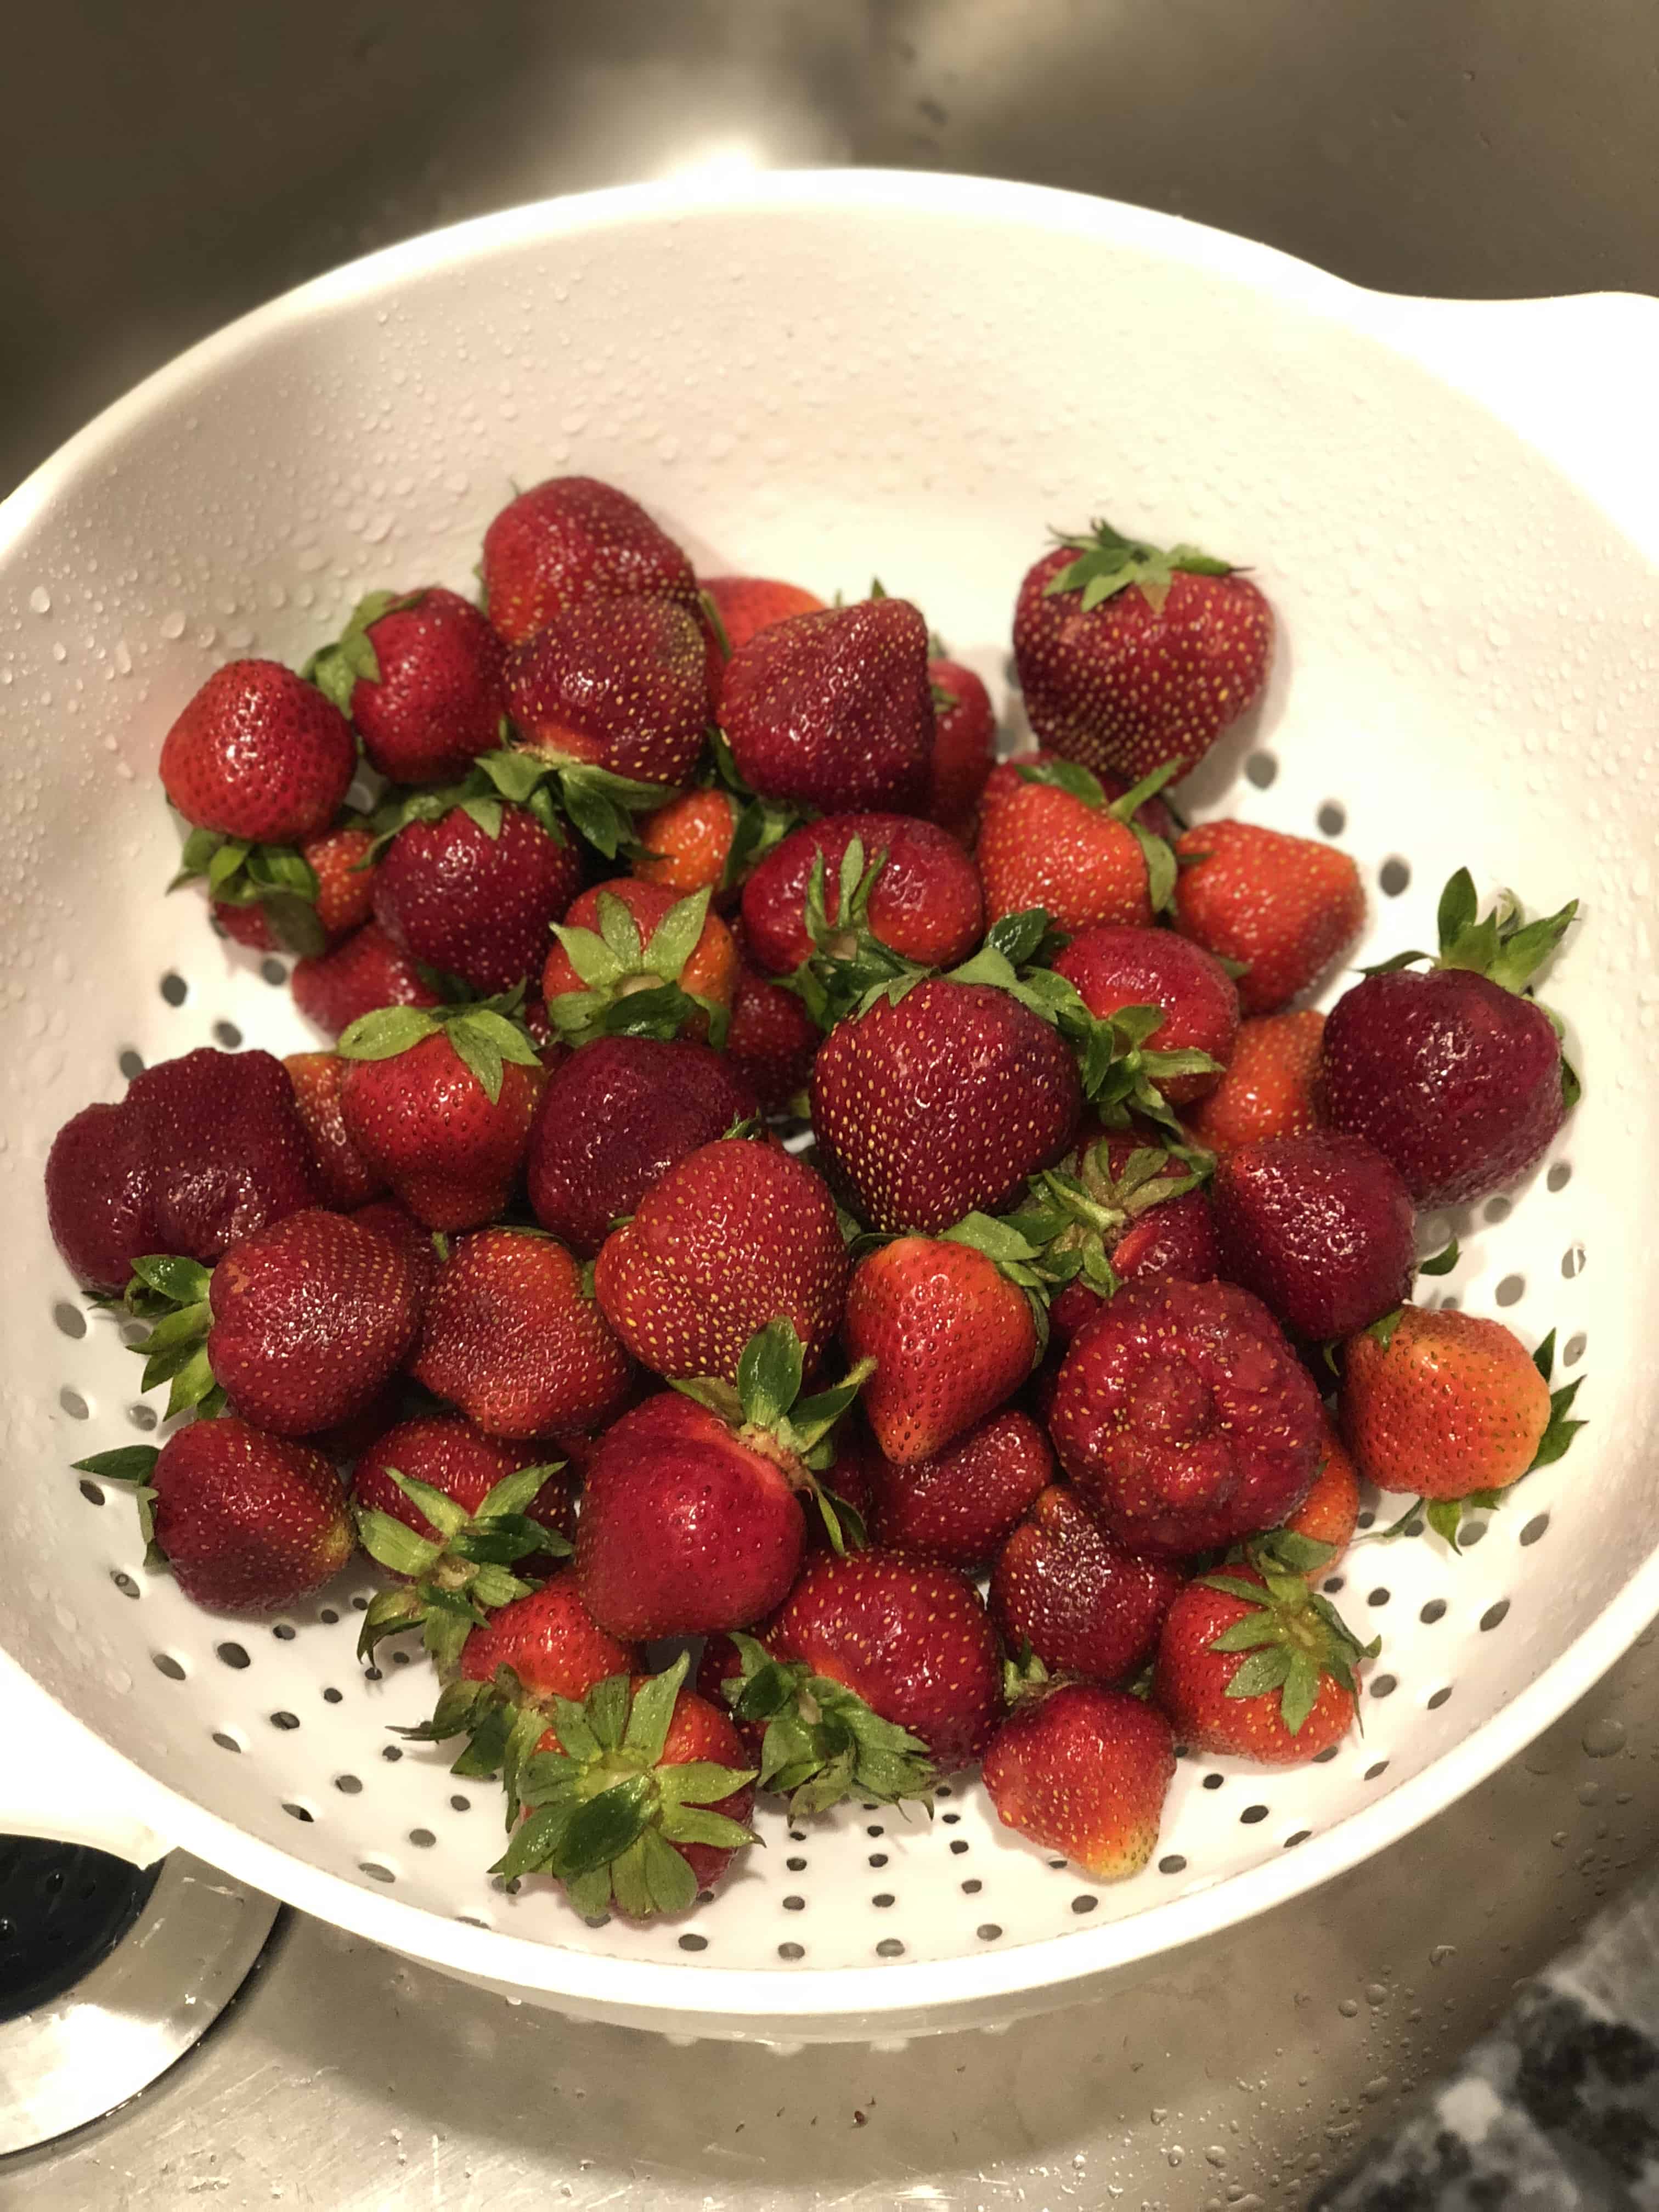 Drain and rinse vinegar bath to keep strawberries fresh